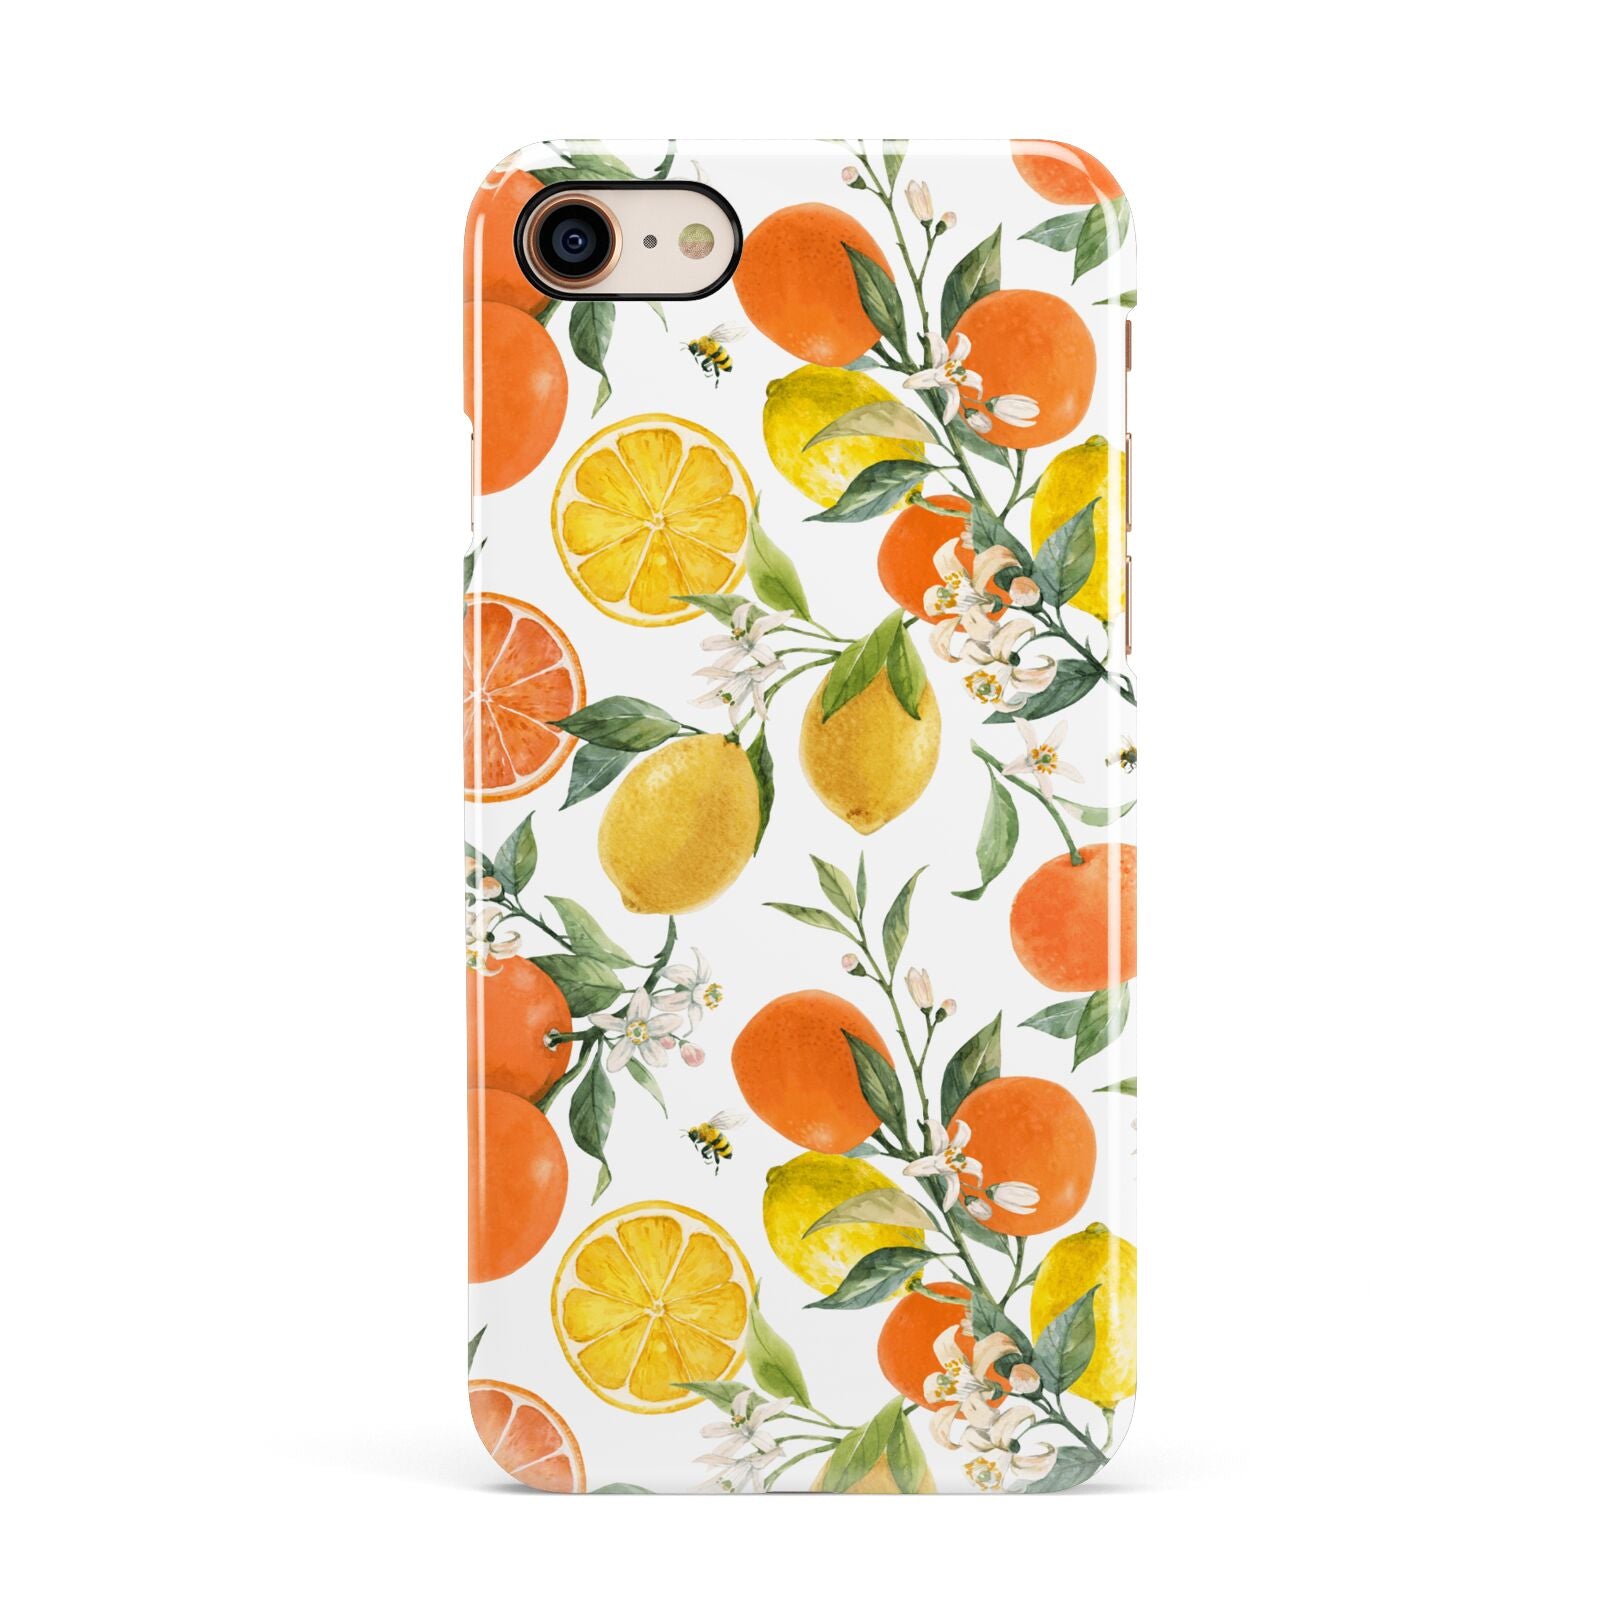 Lemons and Oranges Apple iPhone 7 8 3D Snap Case